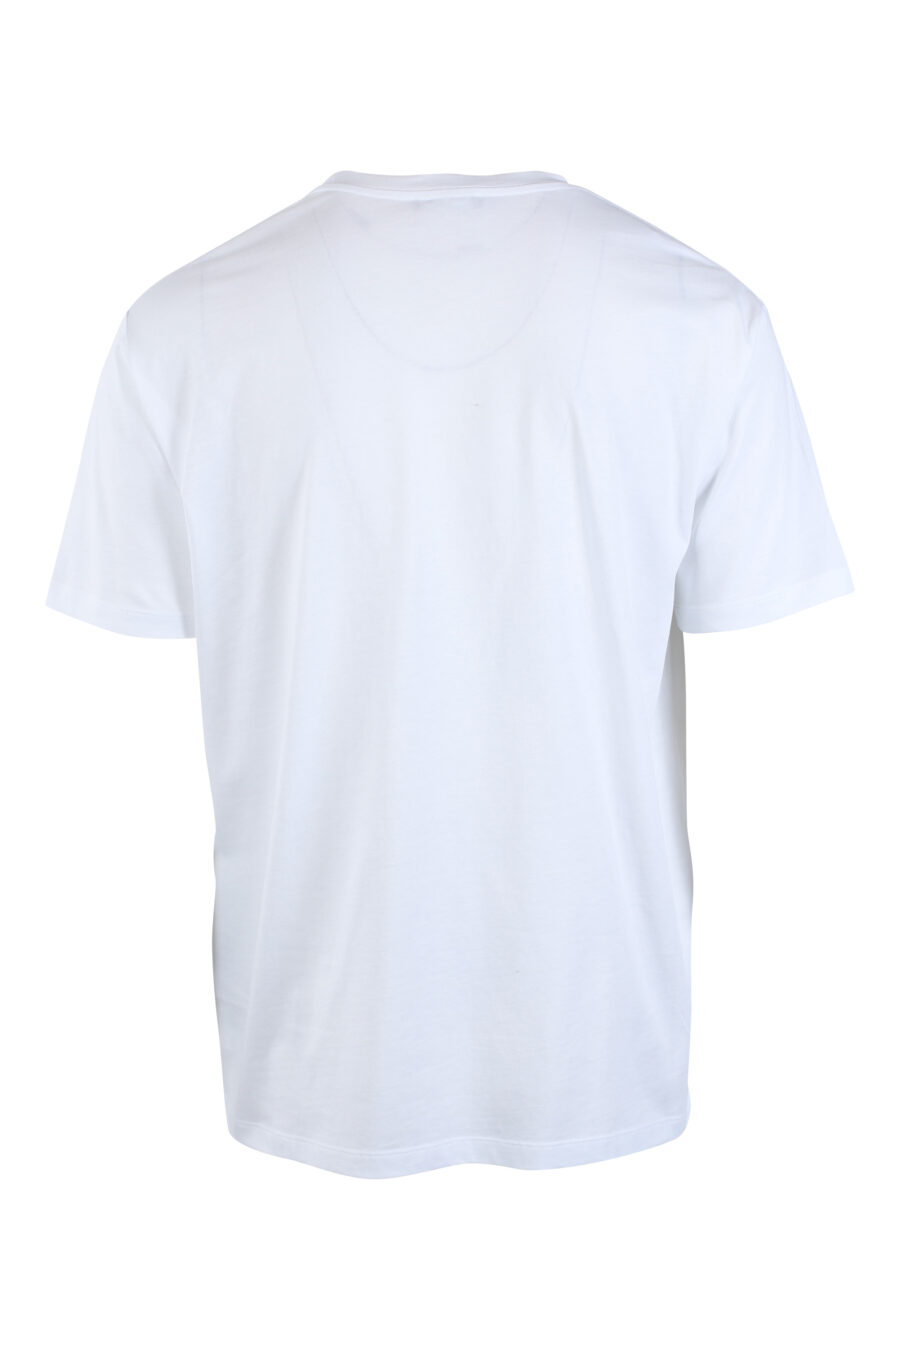 Camiseta blanca con maxilogo negro "paris" - IMG 2608